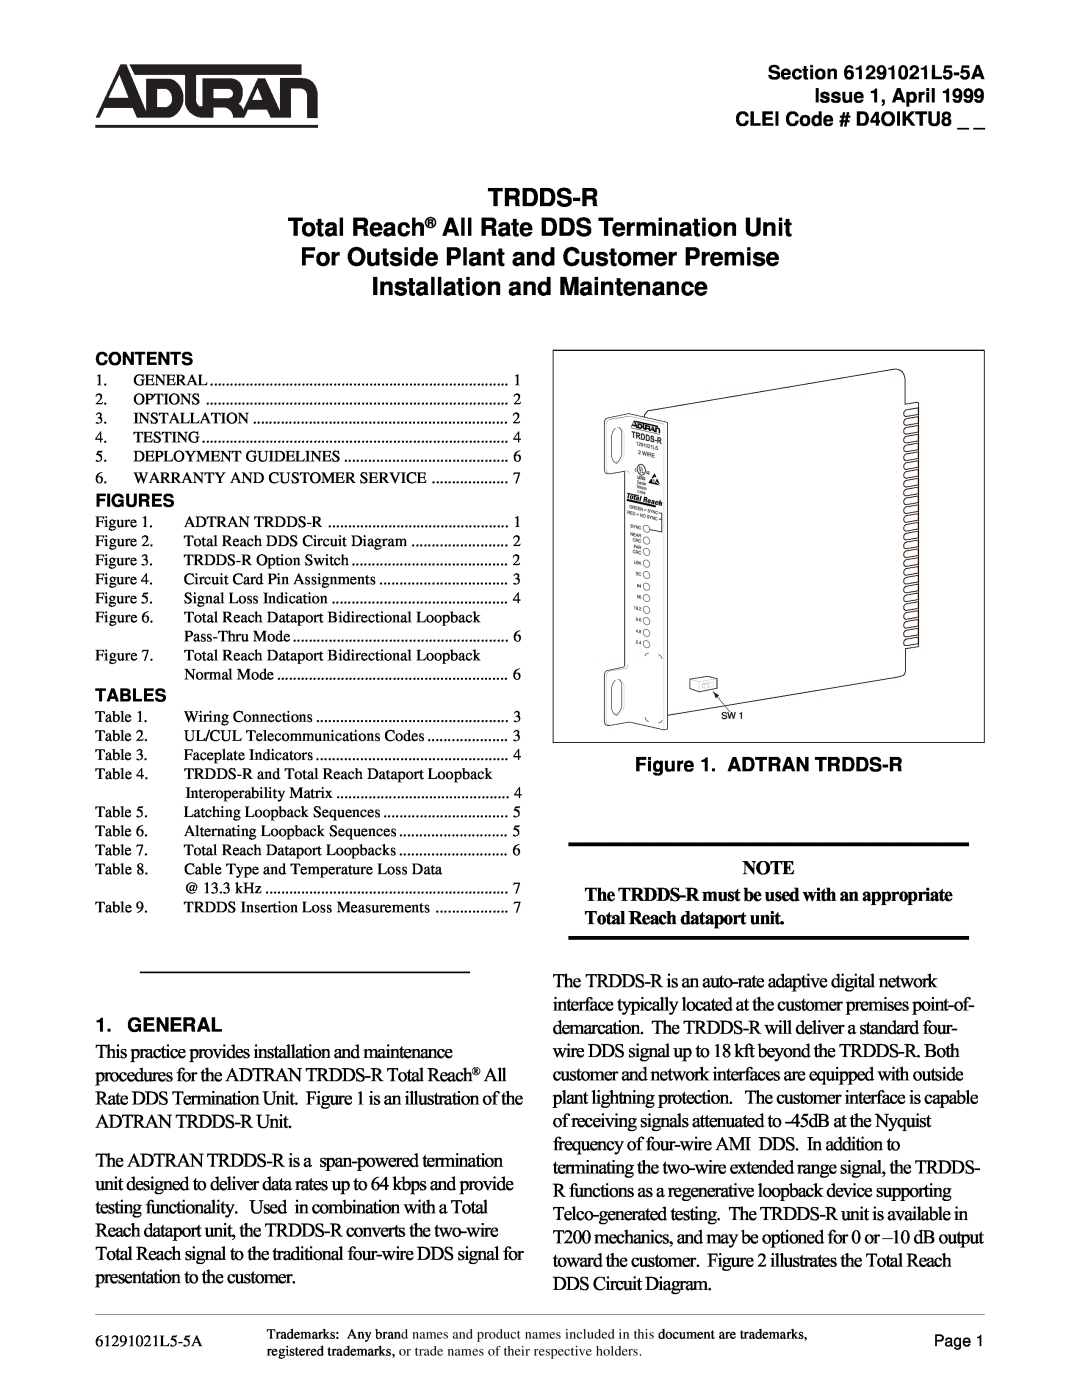 ADTRAN TRDDS-R warranty L5-5A Issue 1, April CLEI Code # D4OIKTU8, Adtran Trdds-R, General, Contents, Figures, Tables 